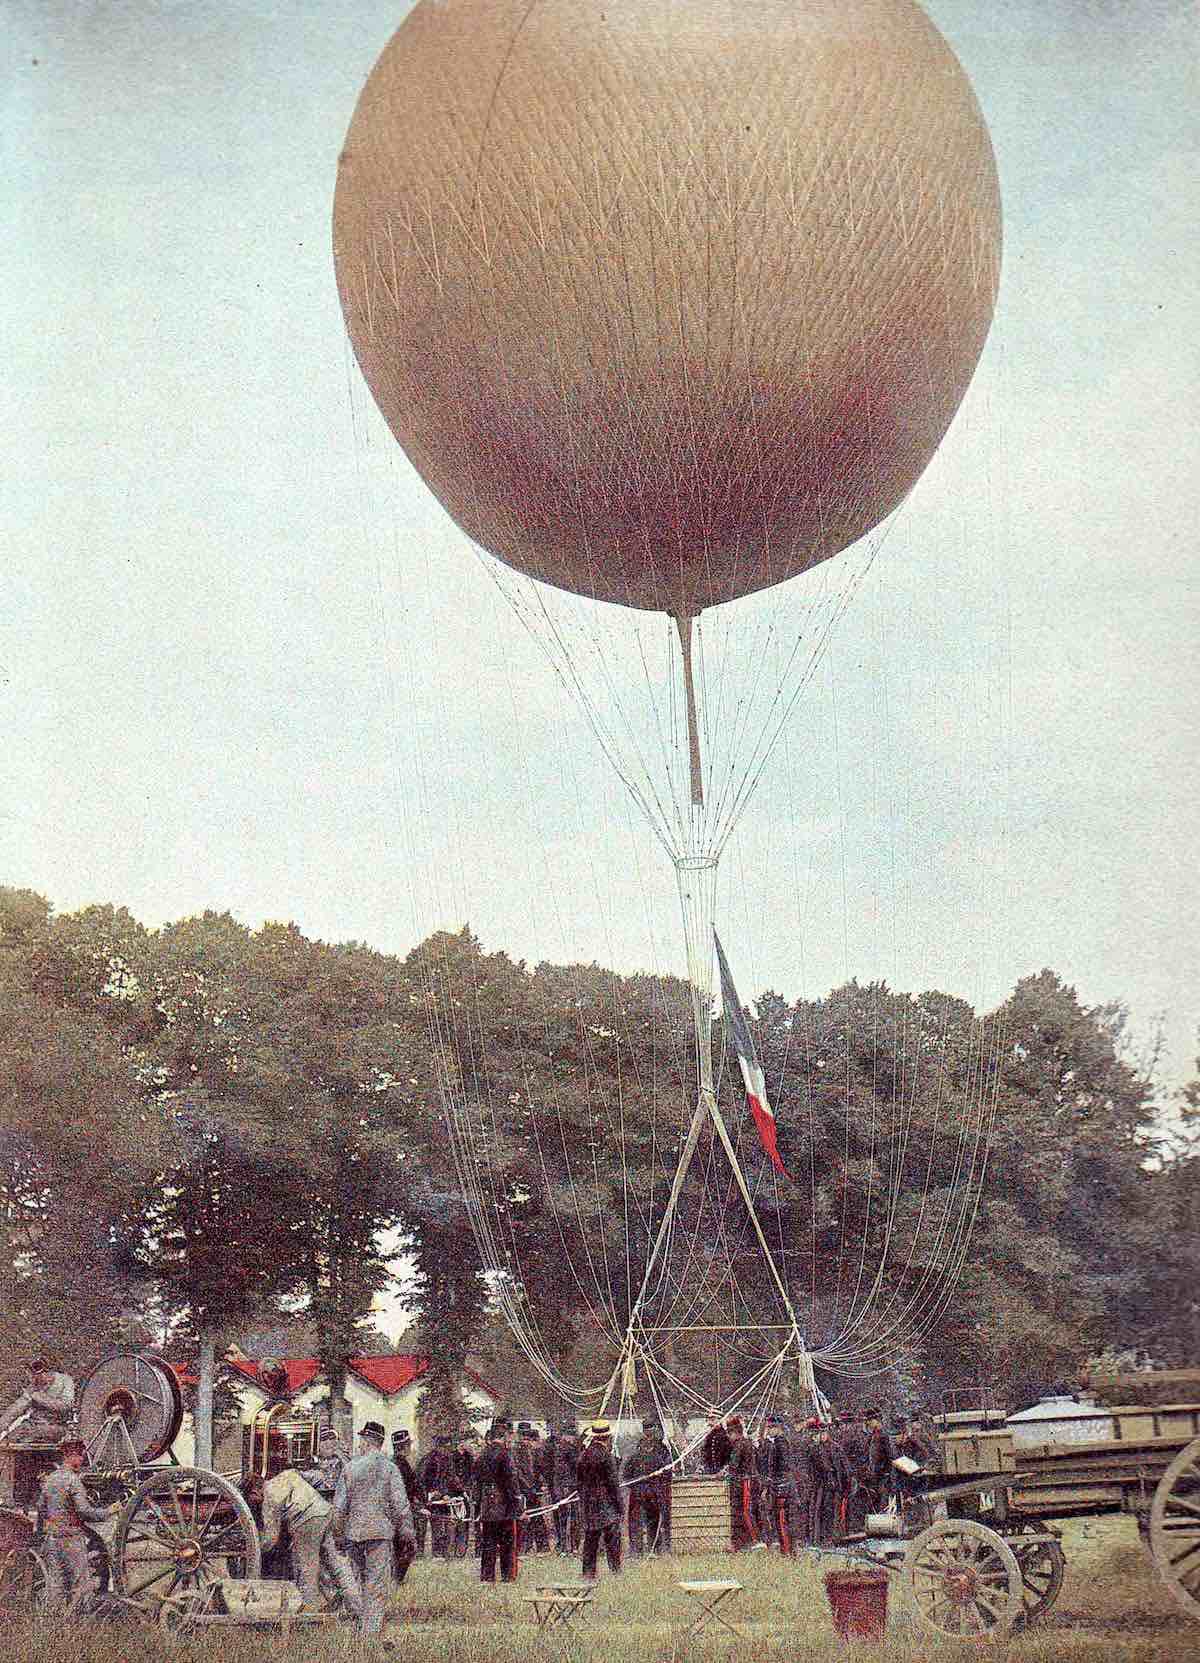 ispitni let sfernog balona francuske vojske 1899. godine